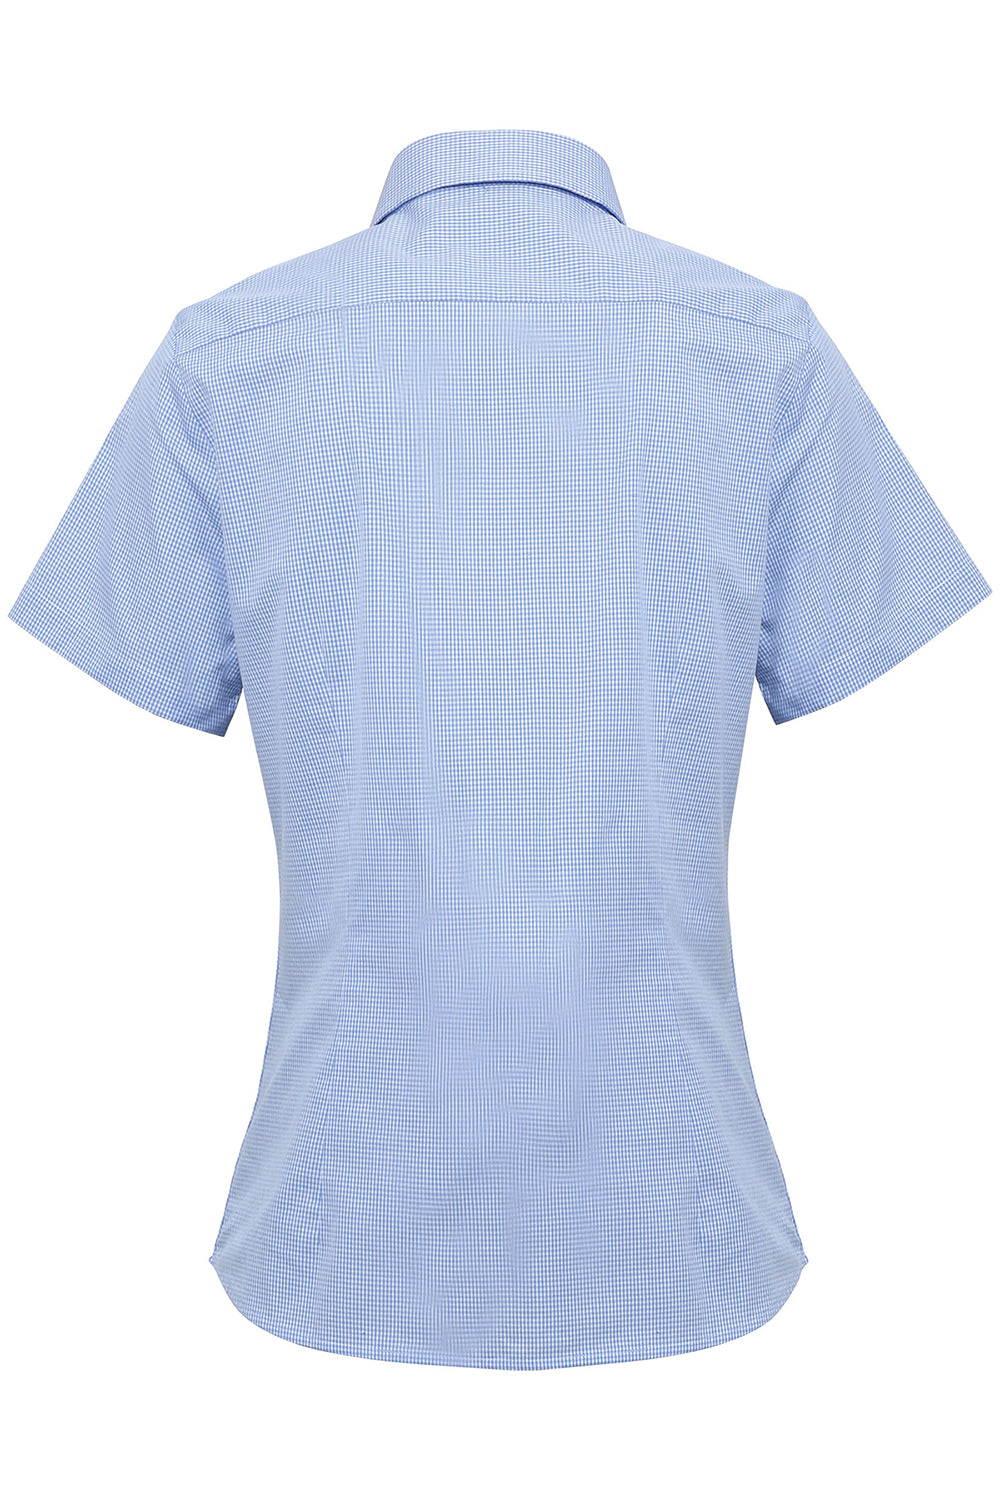 Artisan Collection RP321 Womens Microcheck Gingham Short Sleeve Button Down Shirt Light Blue/White Model Flat Back